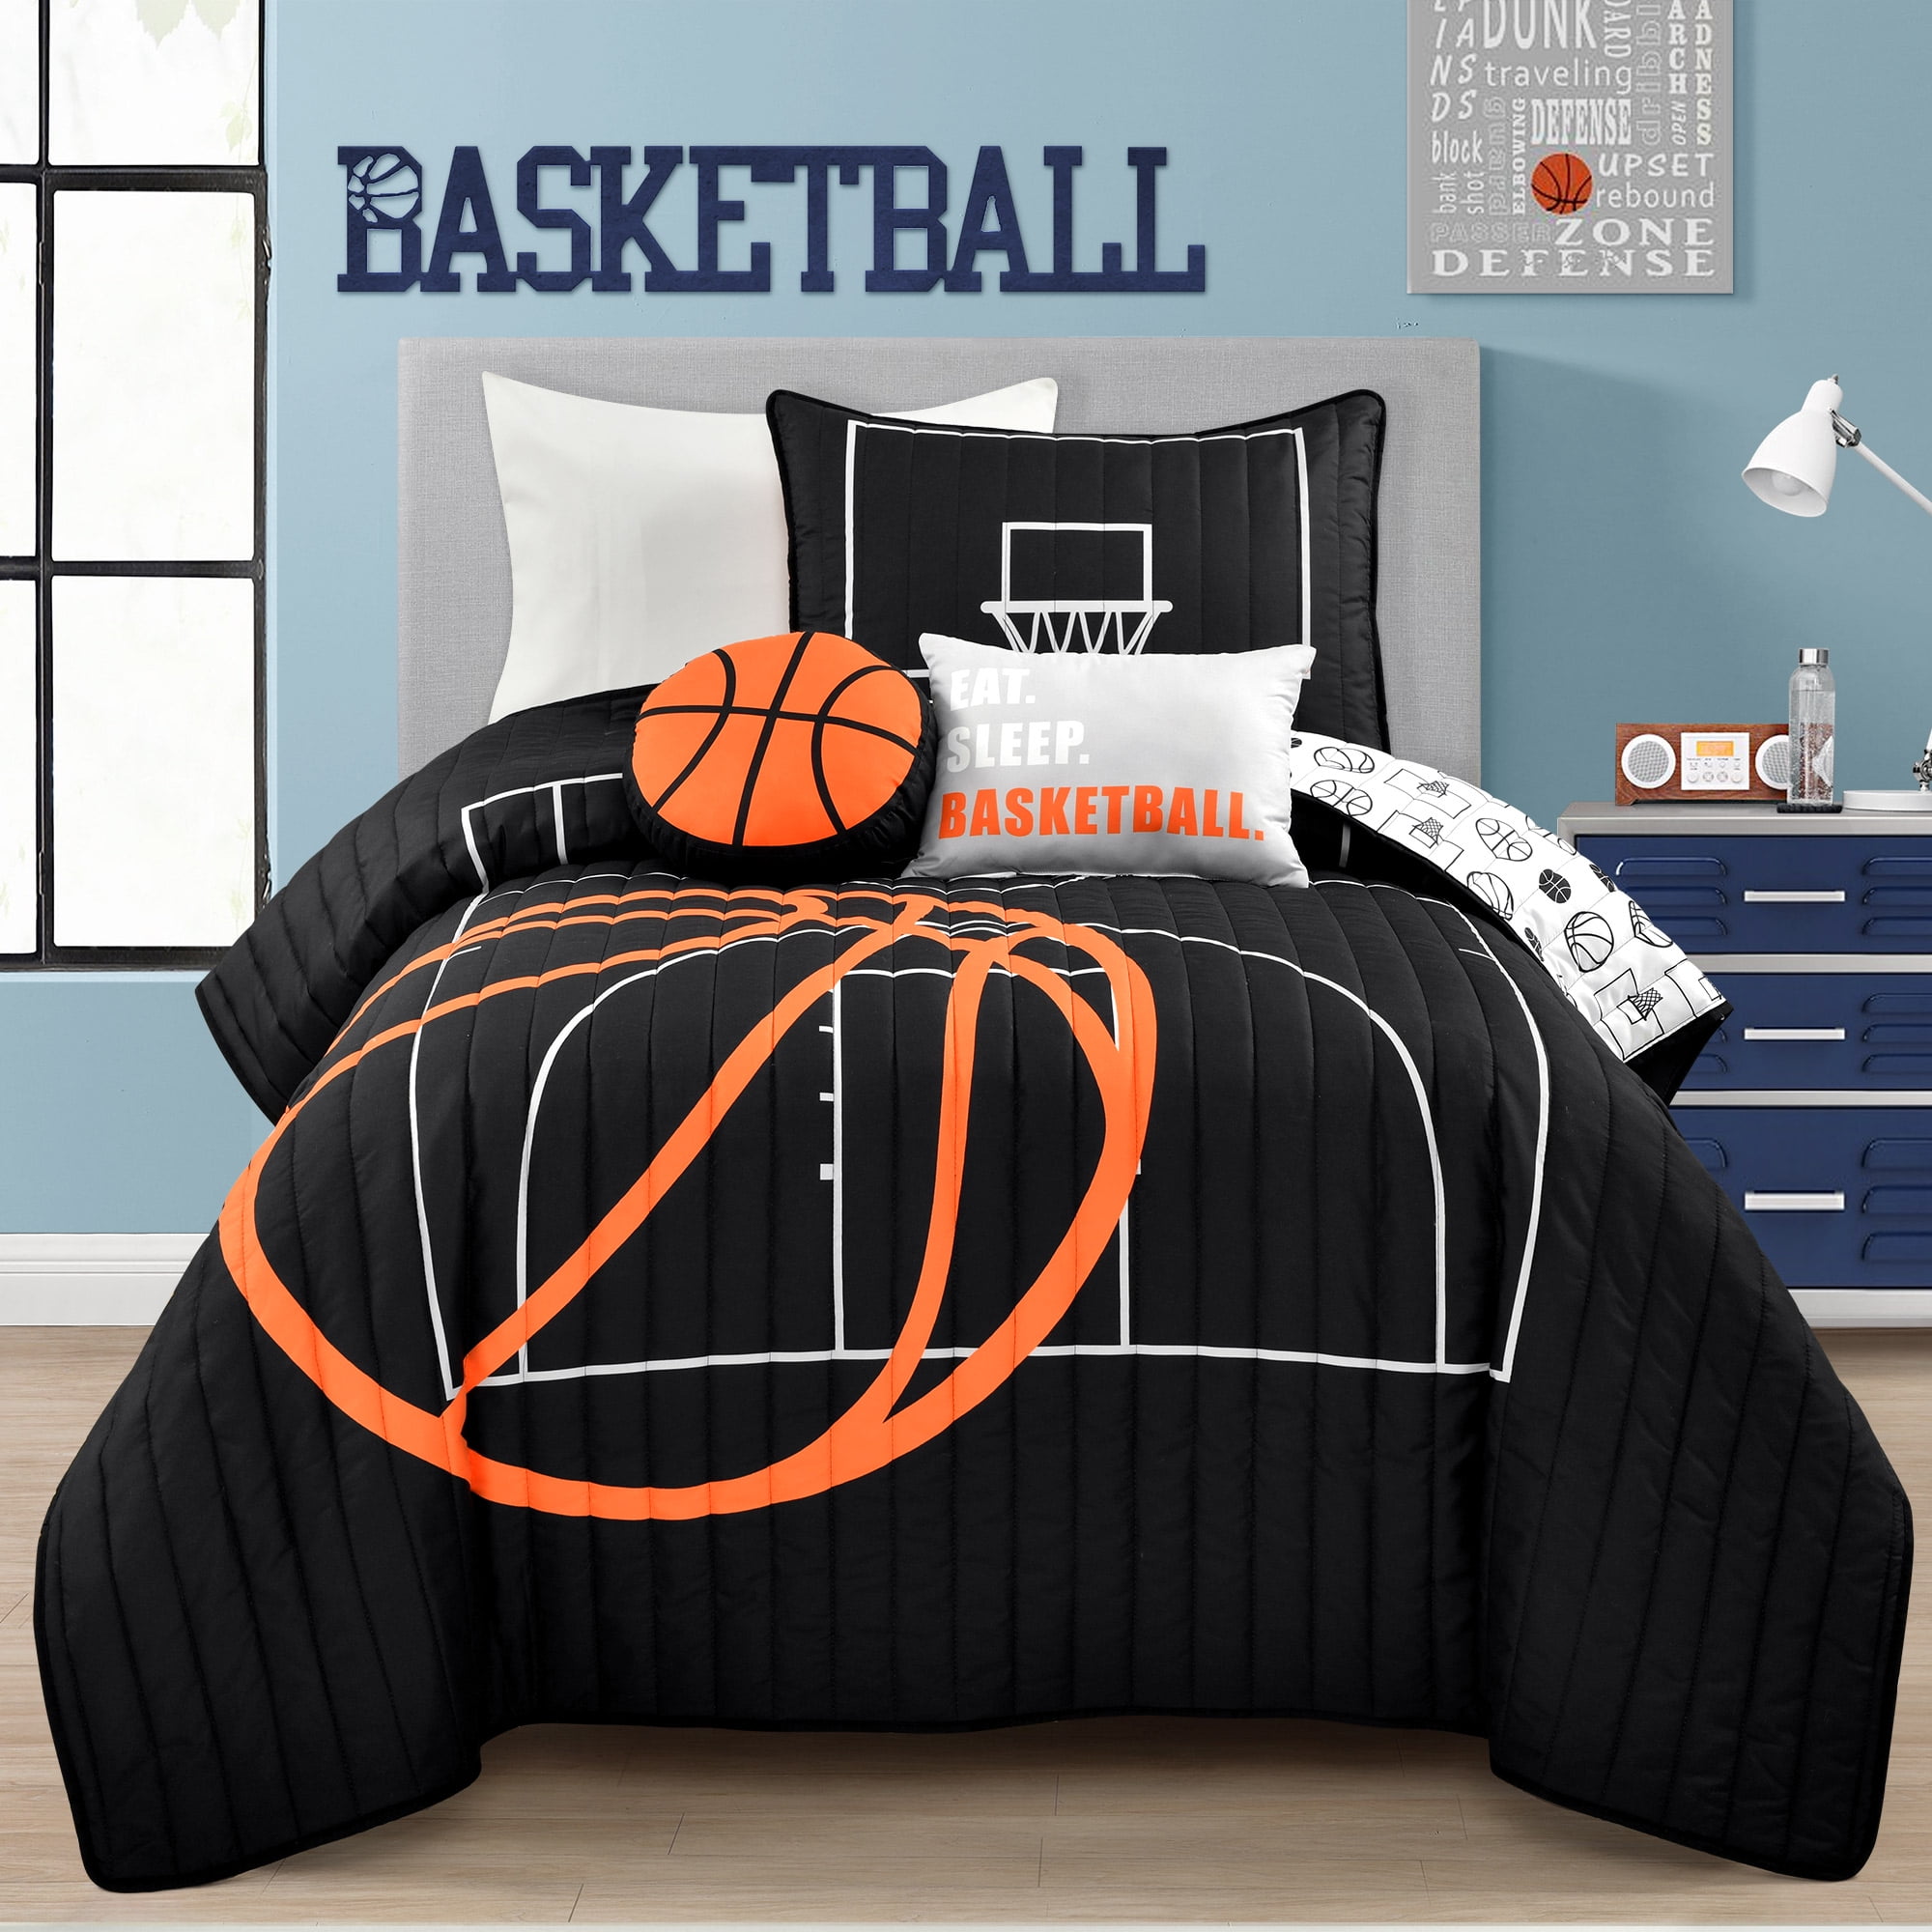 Litanika Basketball Court Comforter Twin 2 Pieces 1 Basketball Comforter and 1 Pillowcase 66x90lnch Microfiber 3D Sport Basketball Comforter Bedding Set for Boys Kids